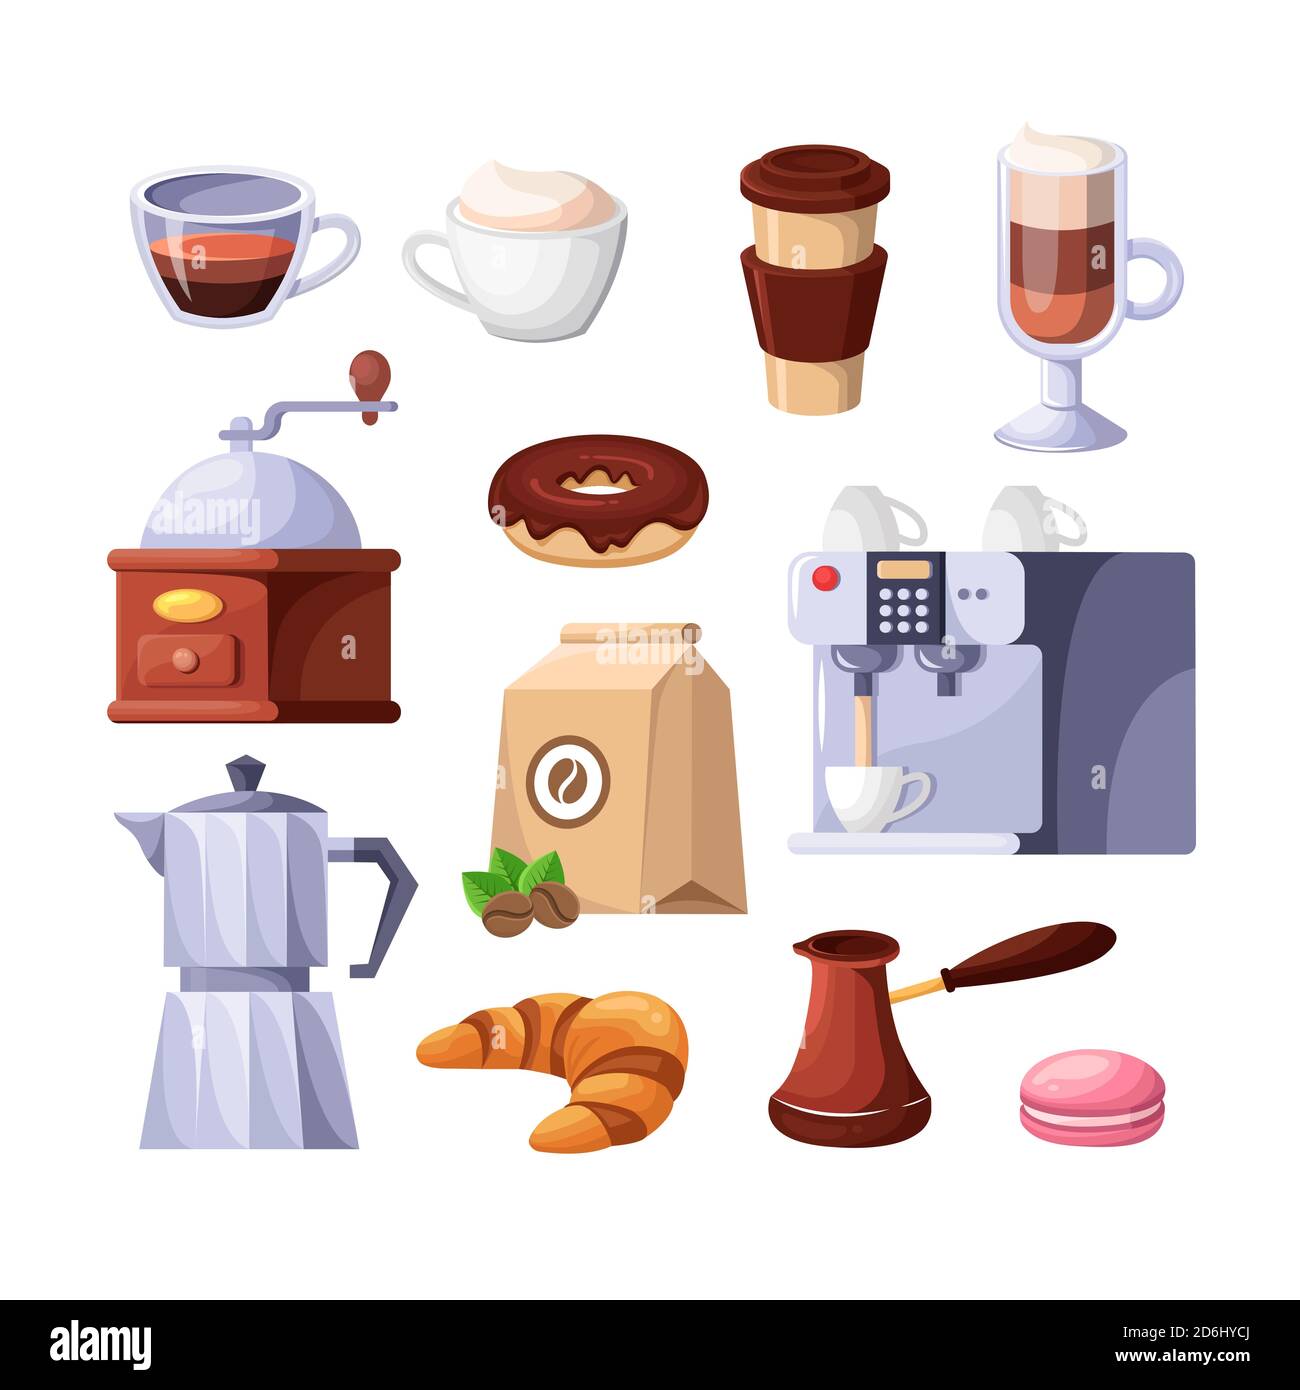 Coffee shop vector isolated icons. Espresso, cappuccino cup, sweet desserts, coffee machine cartoon illustration. Cafe or restaurant breakfast menu de Stock Vector